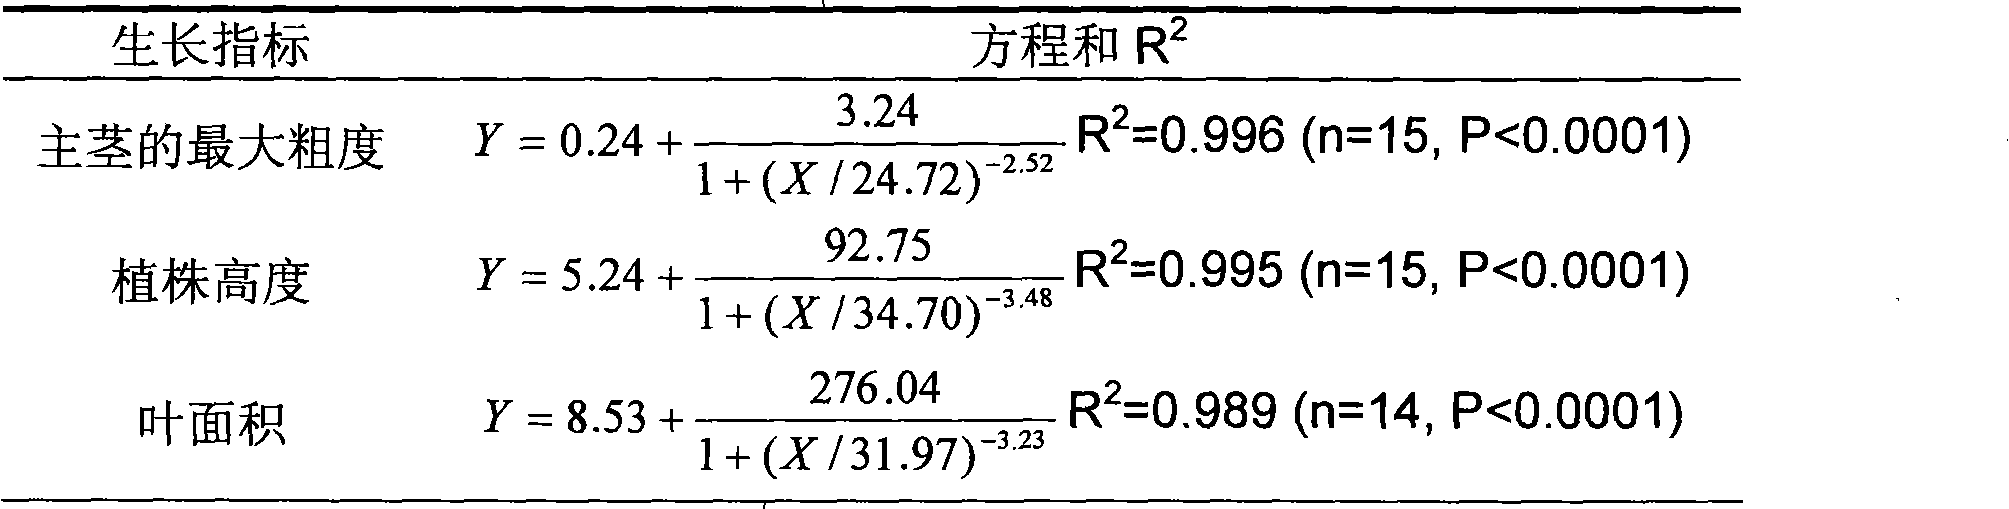 Method for forecasting rhizoma atractylodis growth by four-parameter logistic equation